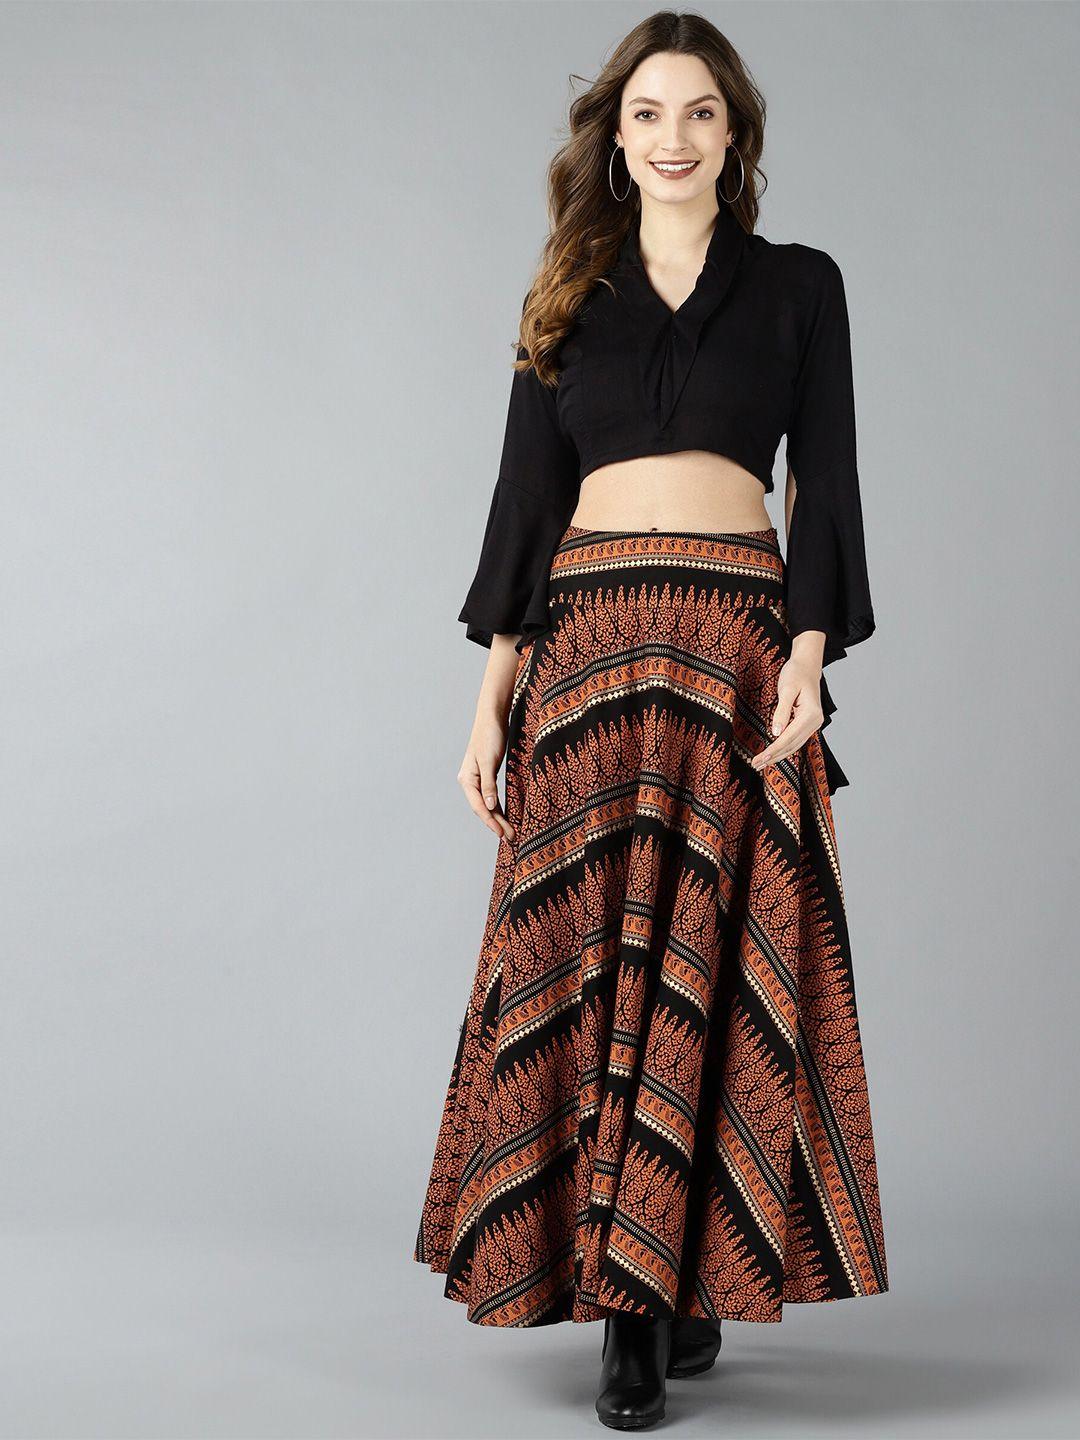 znx-clothing-women-black-&-orange-crop-top-with-skirt